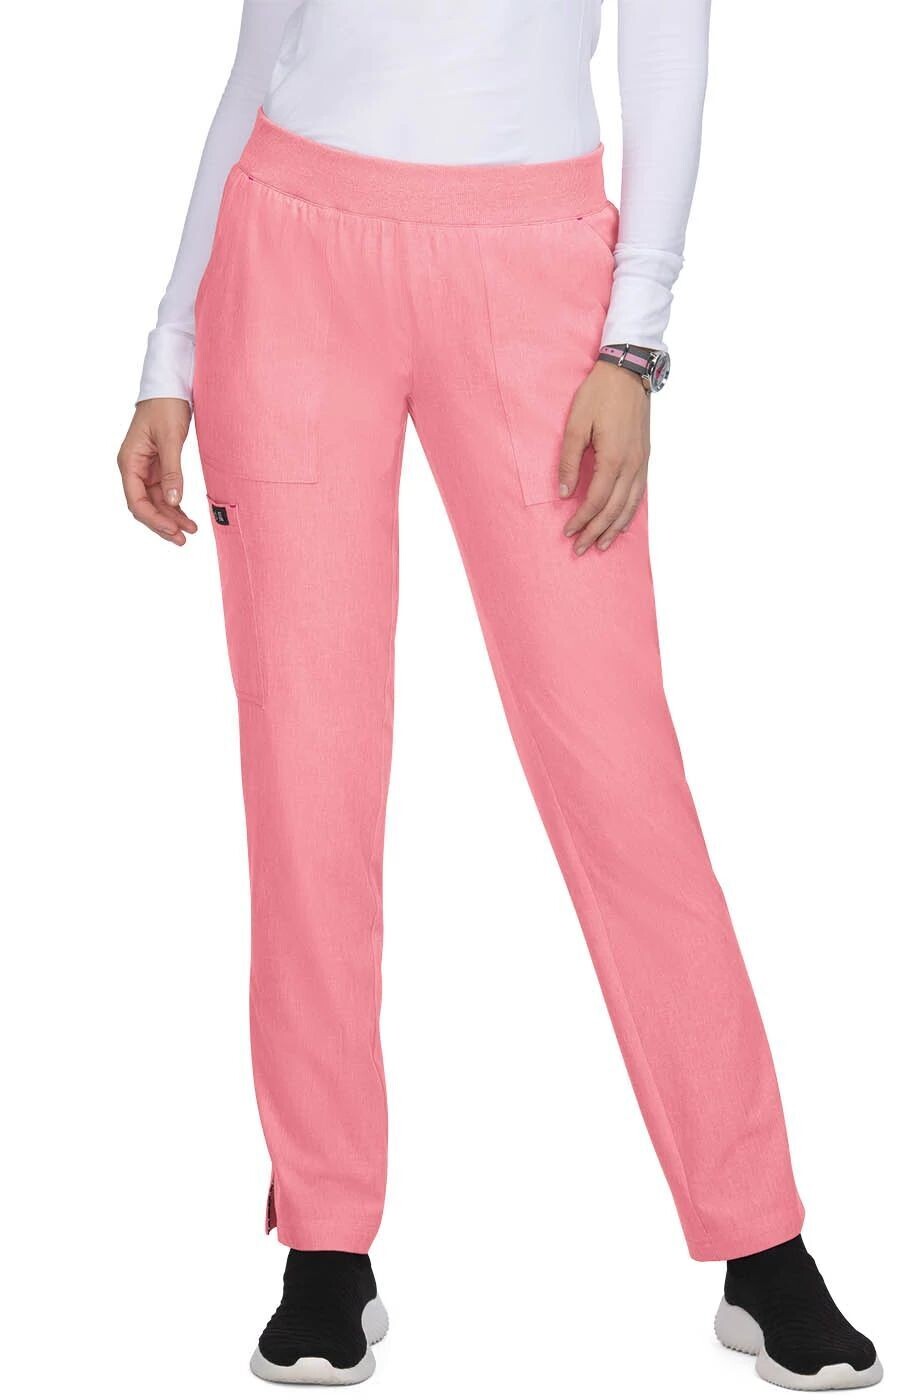 Pantalone KOI BASICS CAROLINE Donna Colore 140. Soft Pink